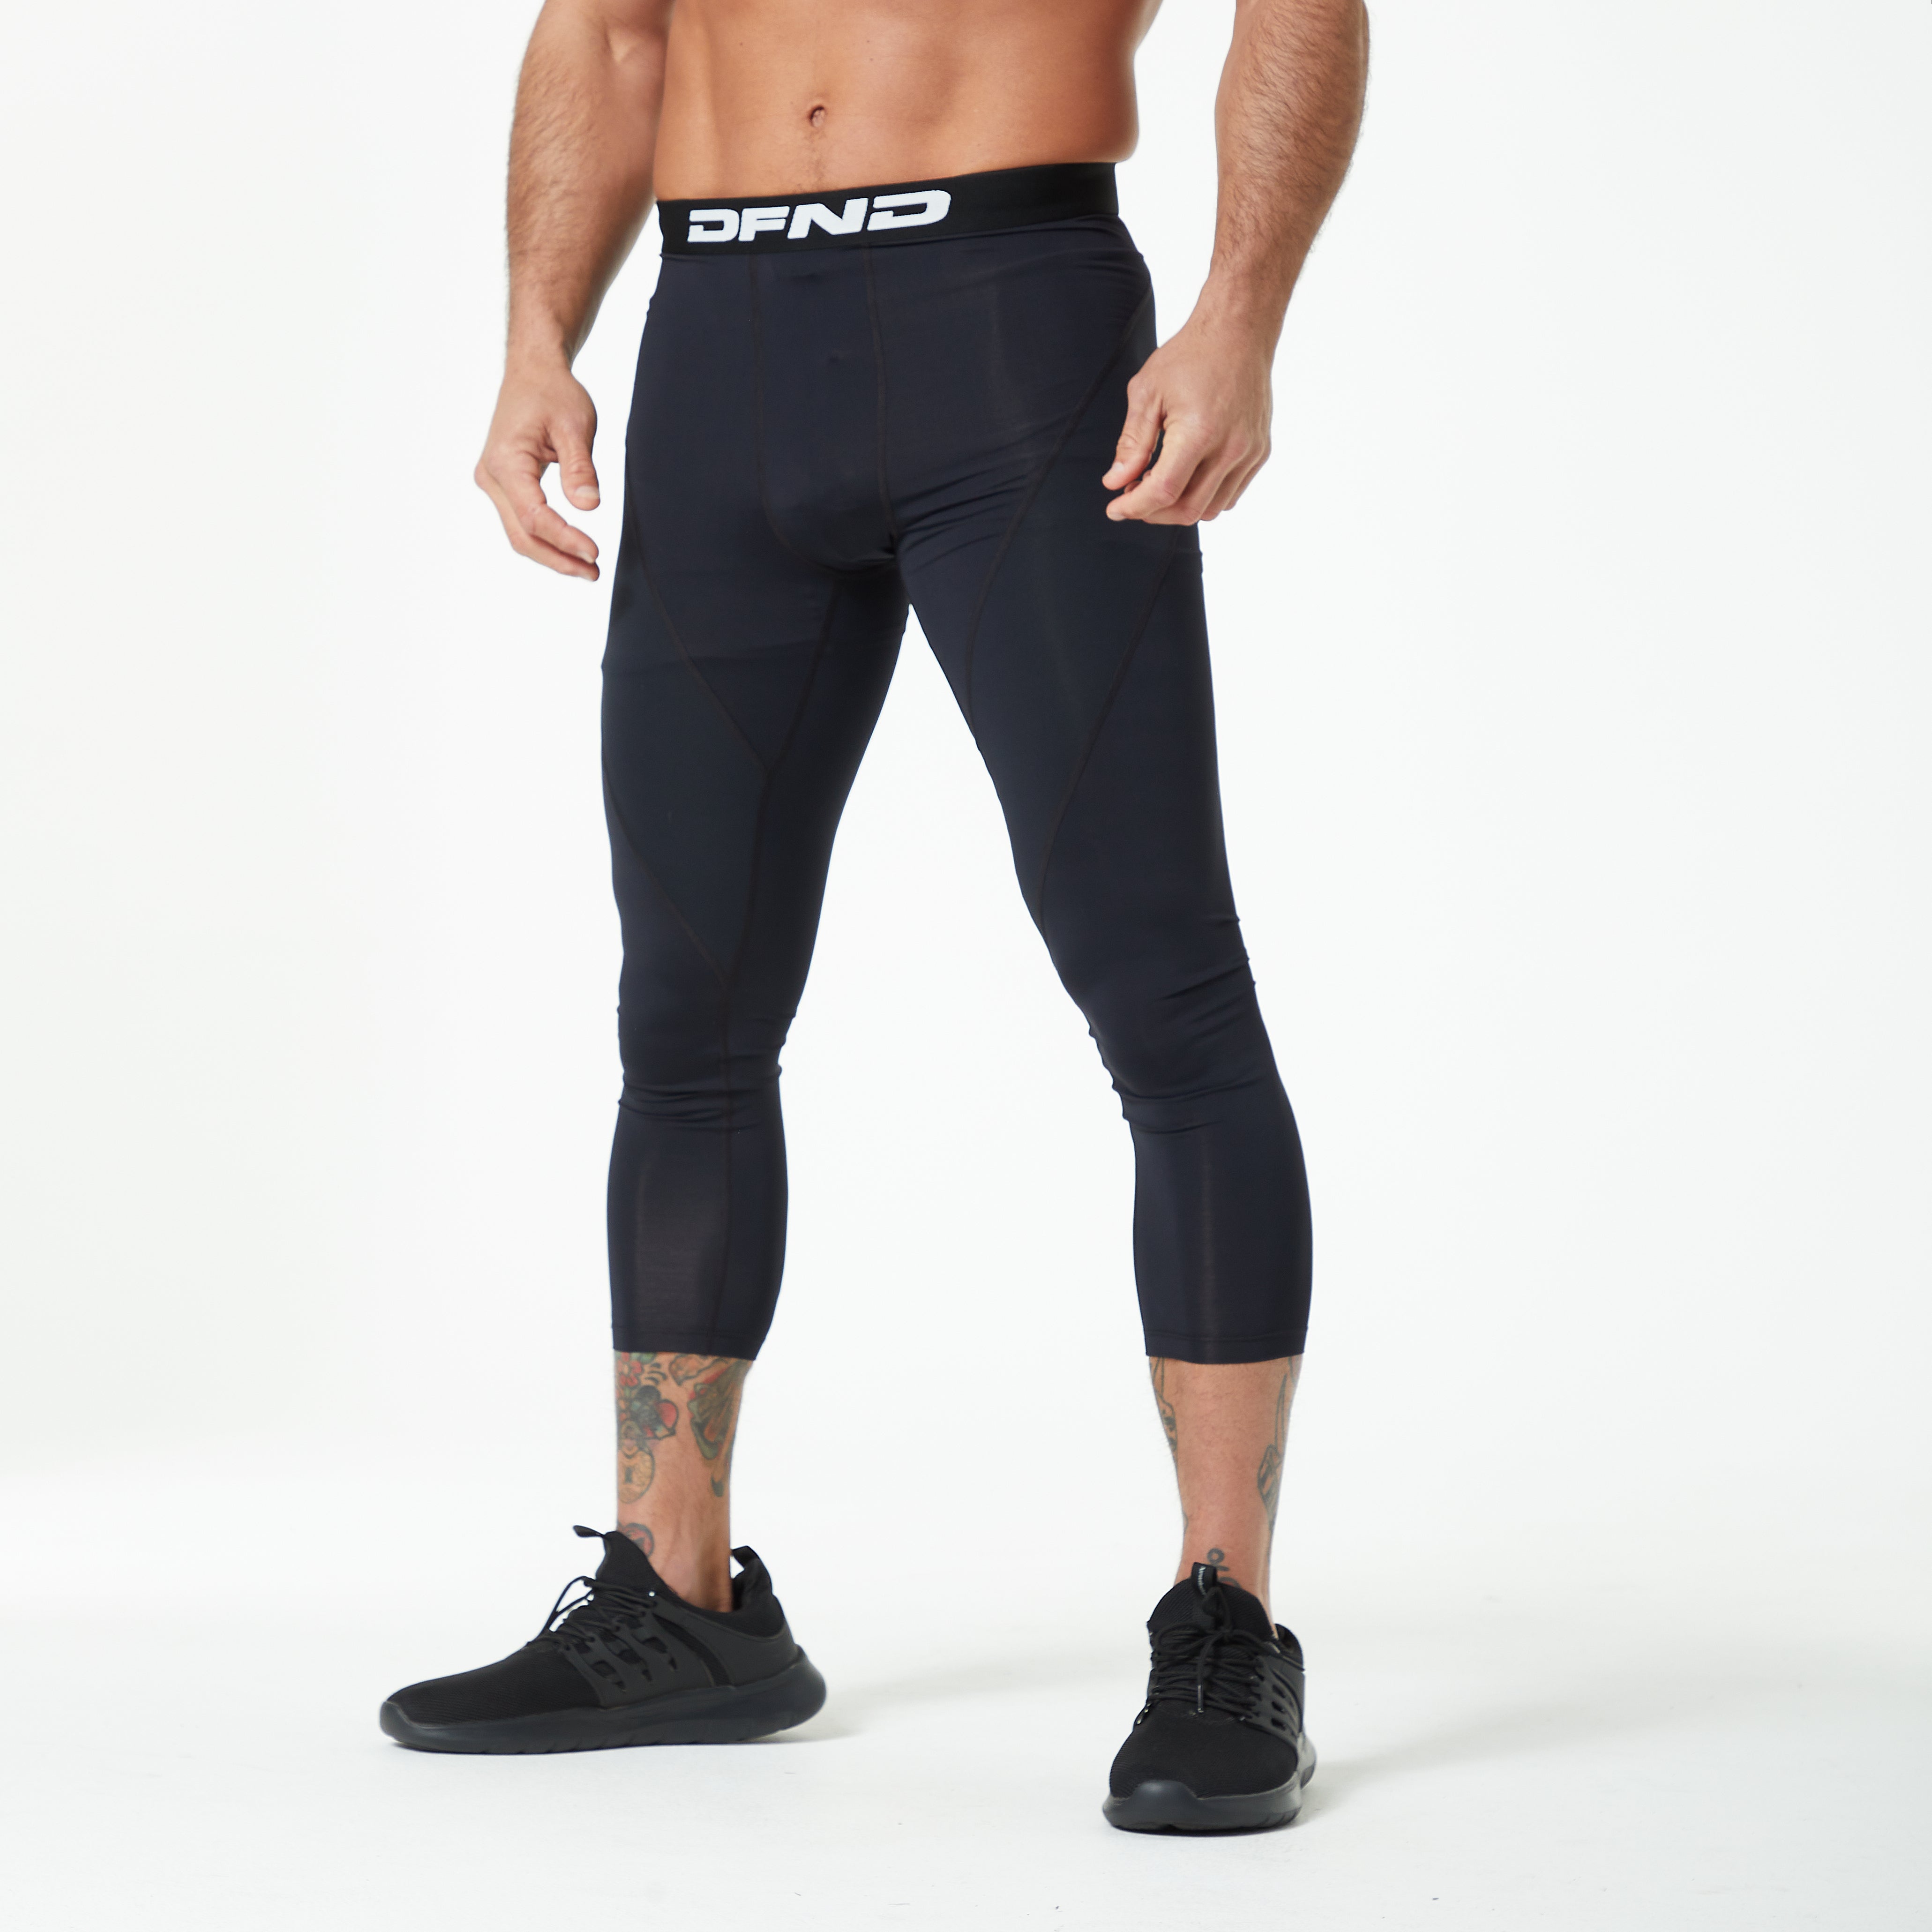 Men's Skinfit Black Yellow Spandex Tights Compression Pants Small 32